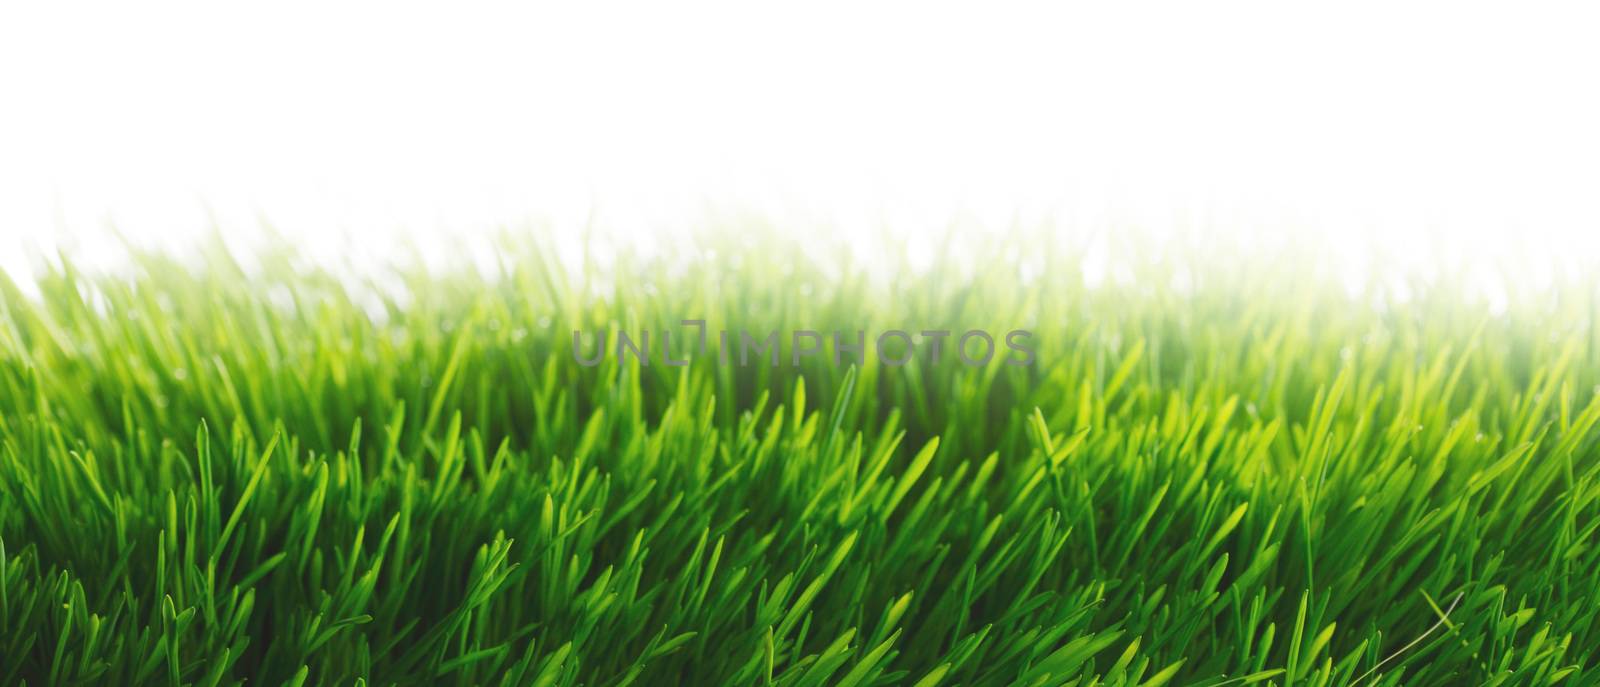 Fresh green grass by Yellowj